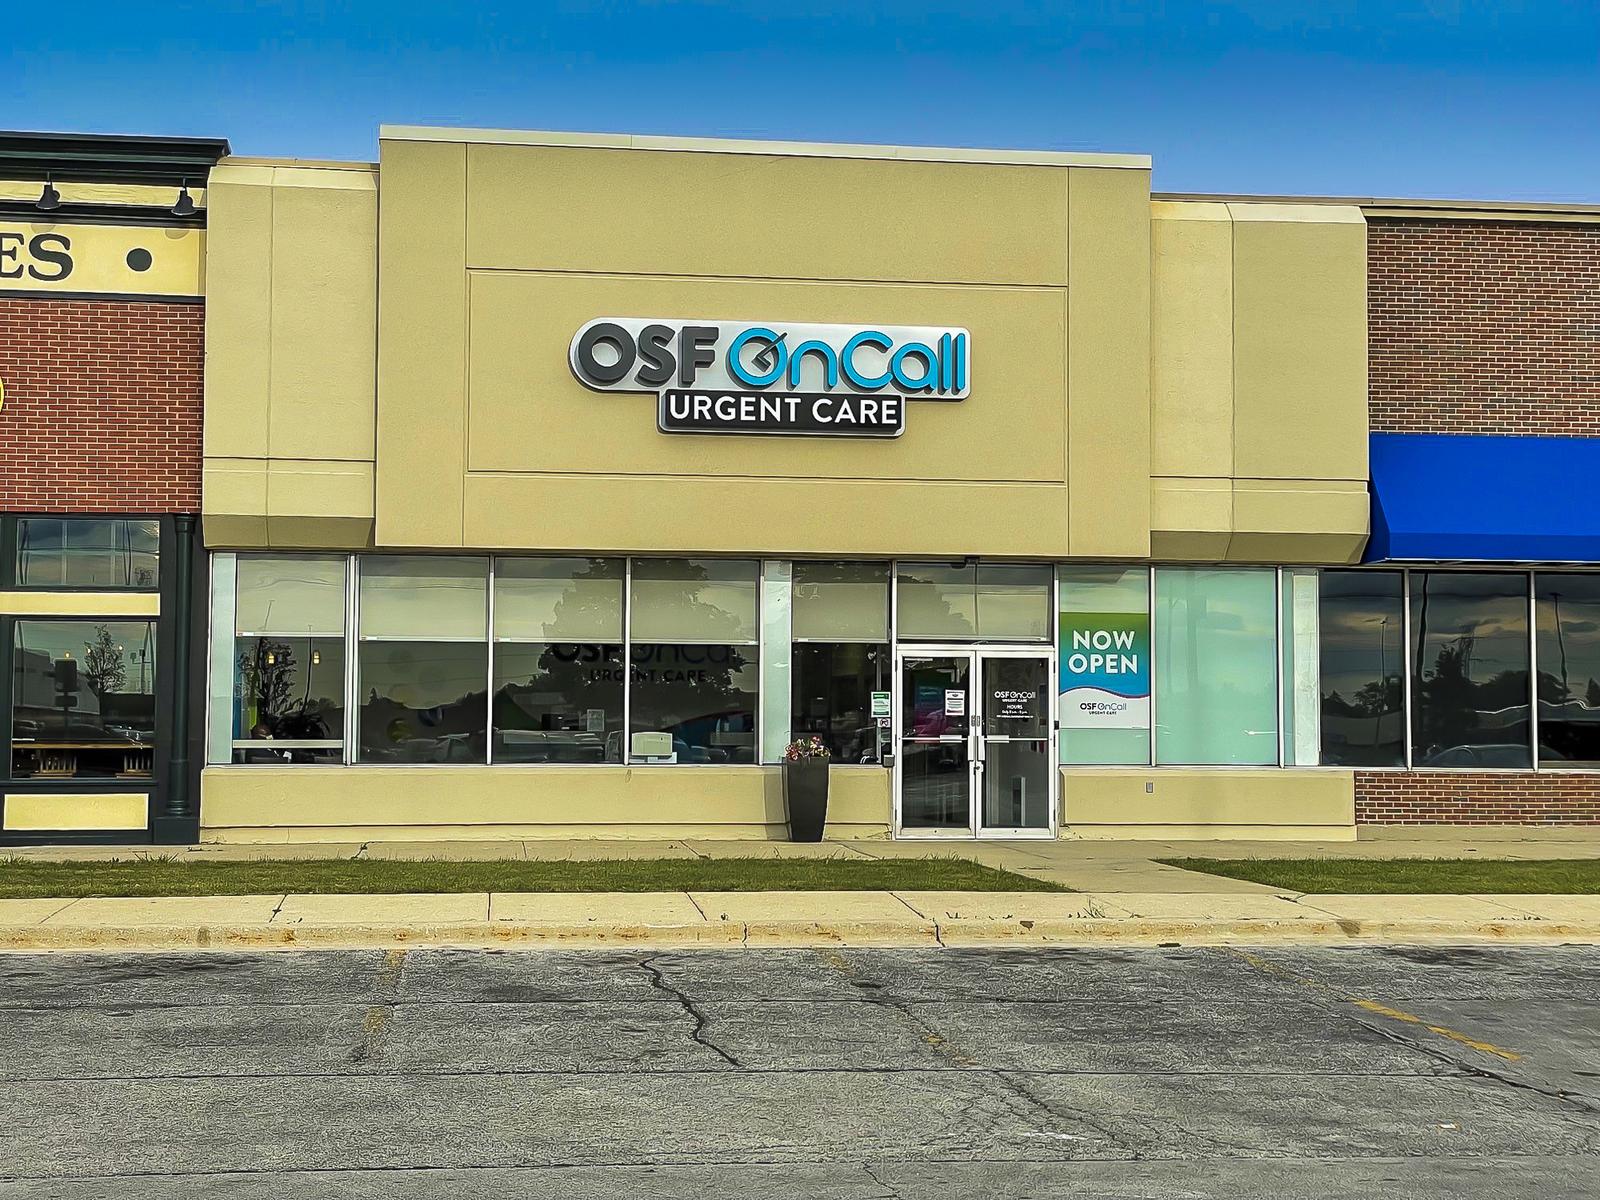 OSF OnCall Urgent Care, 7601 S. Cicero Avenue, Chicago, Illinois, 60652